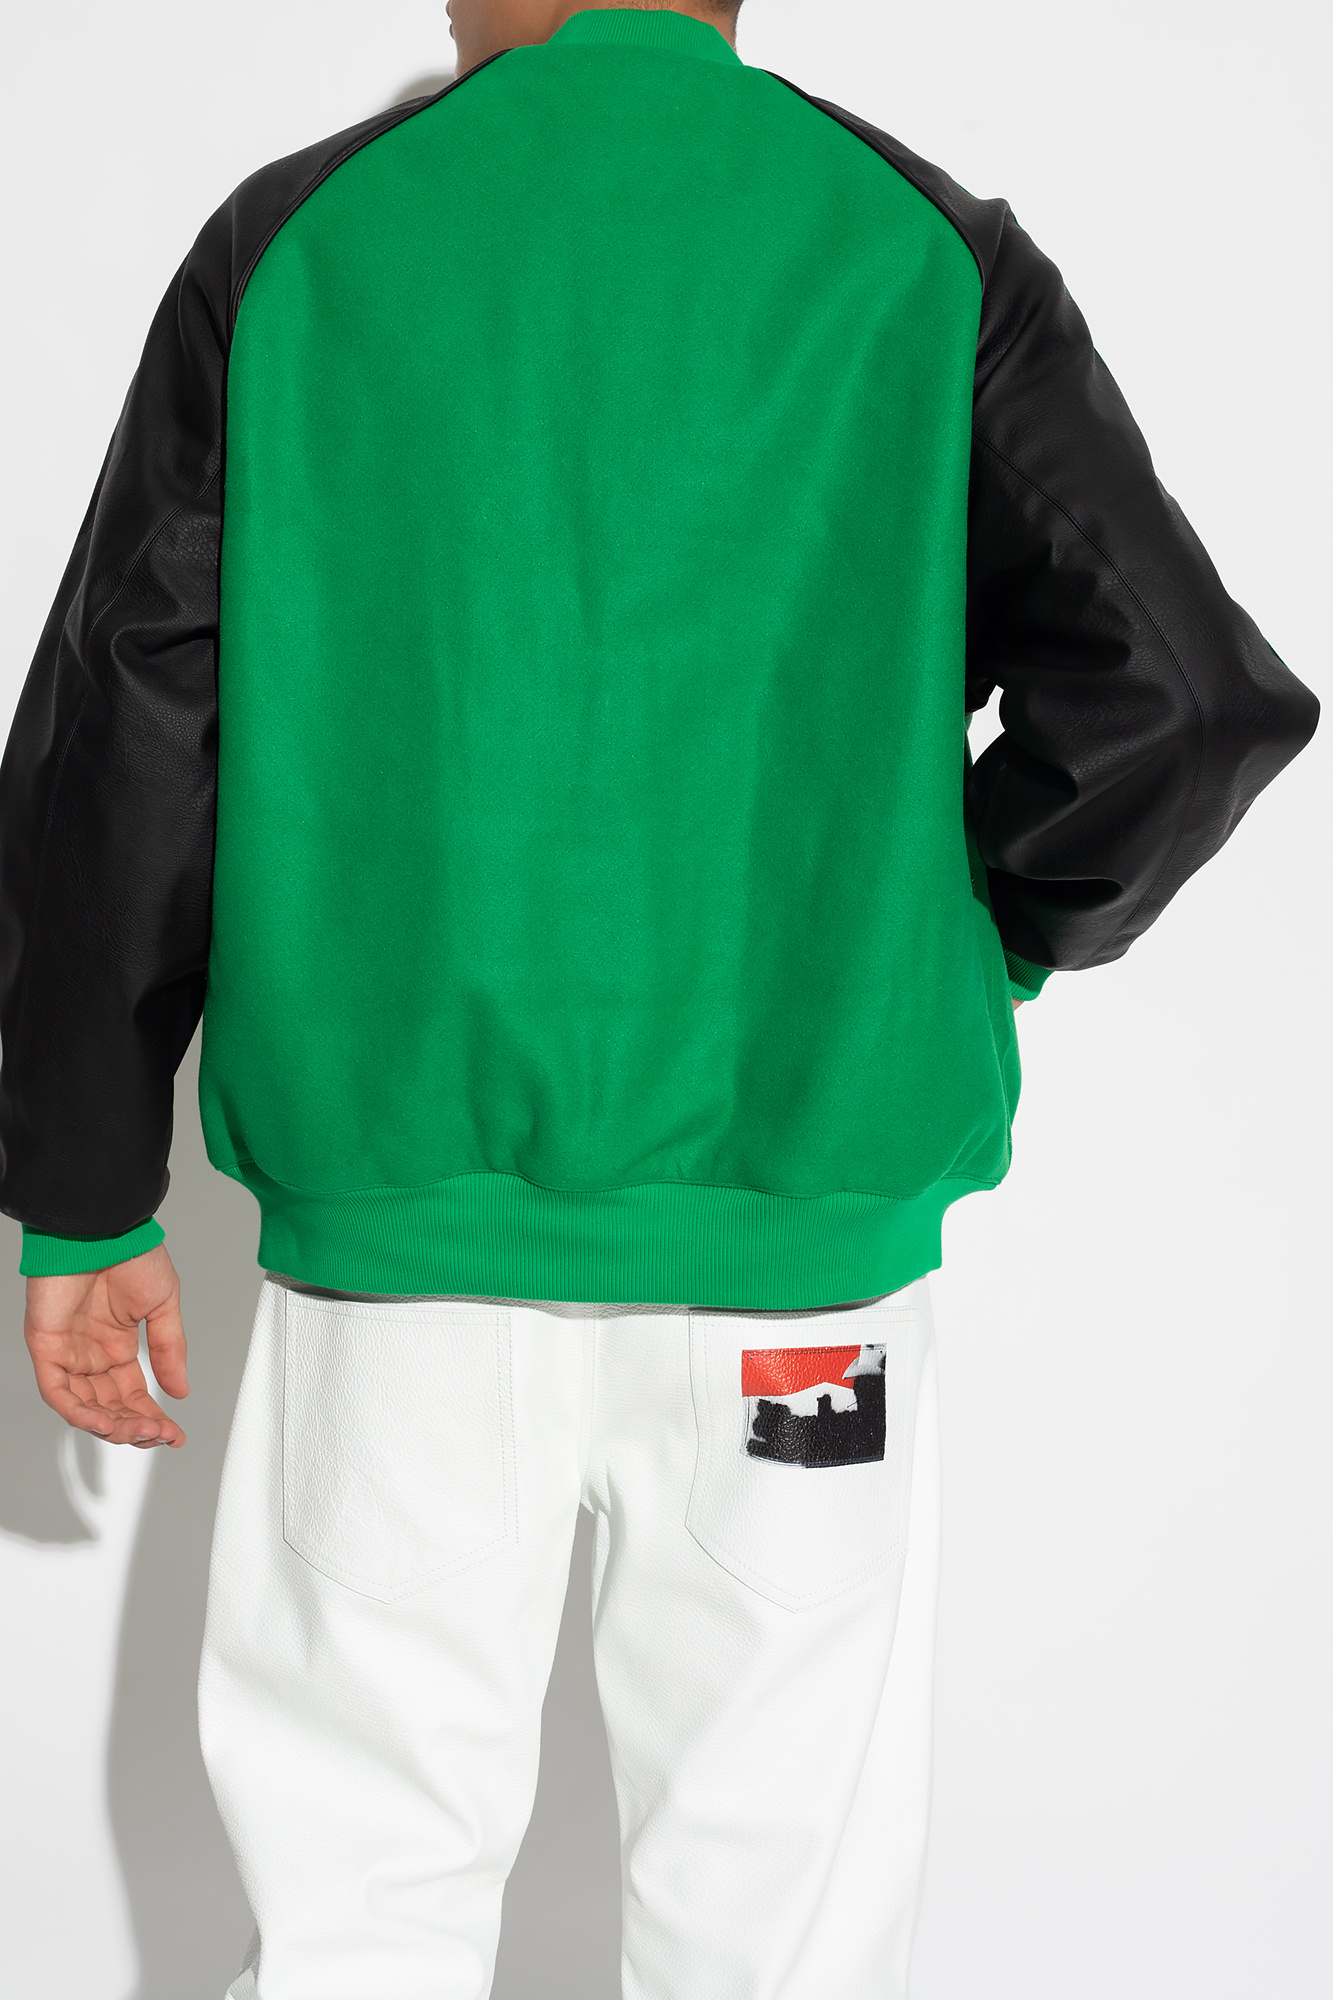 Green Bomber jacket ADIDAS Originals - Vitkac Germany